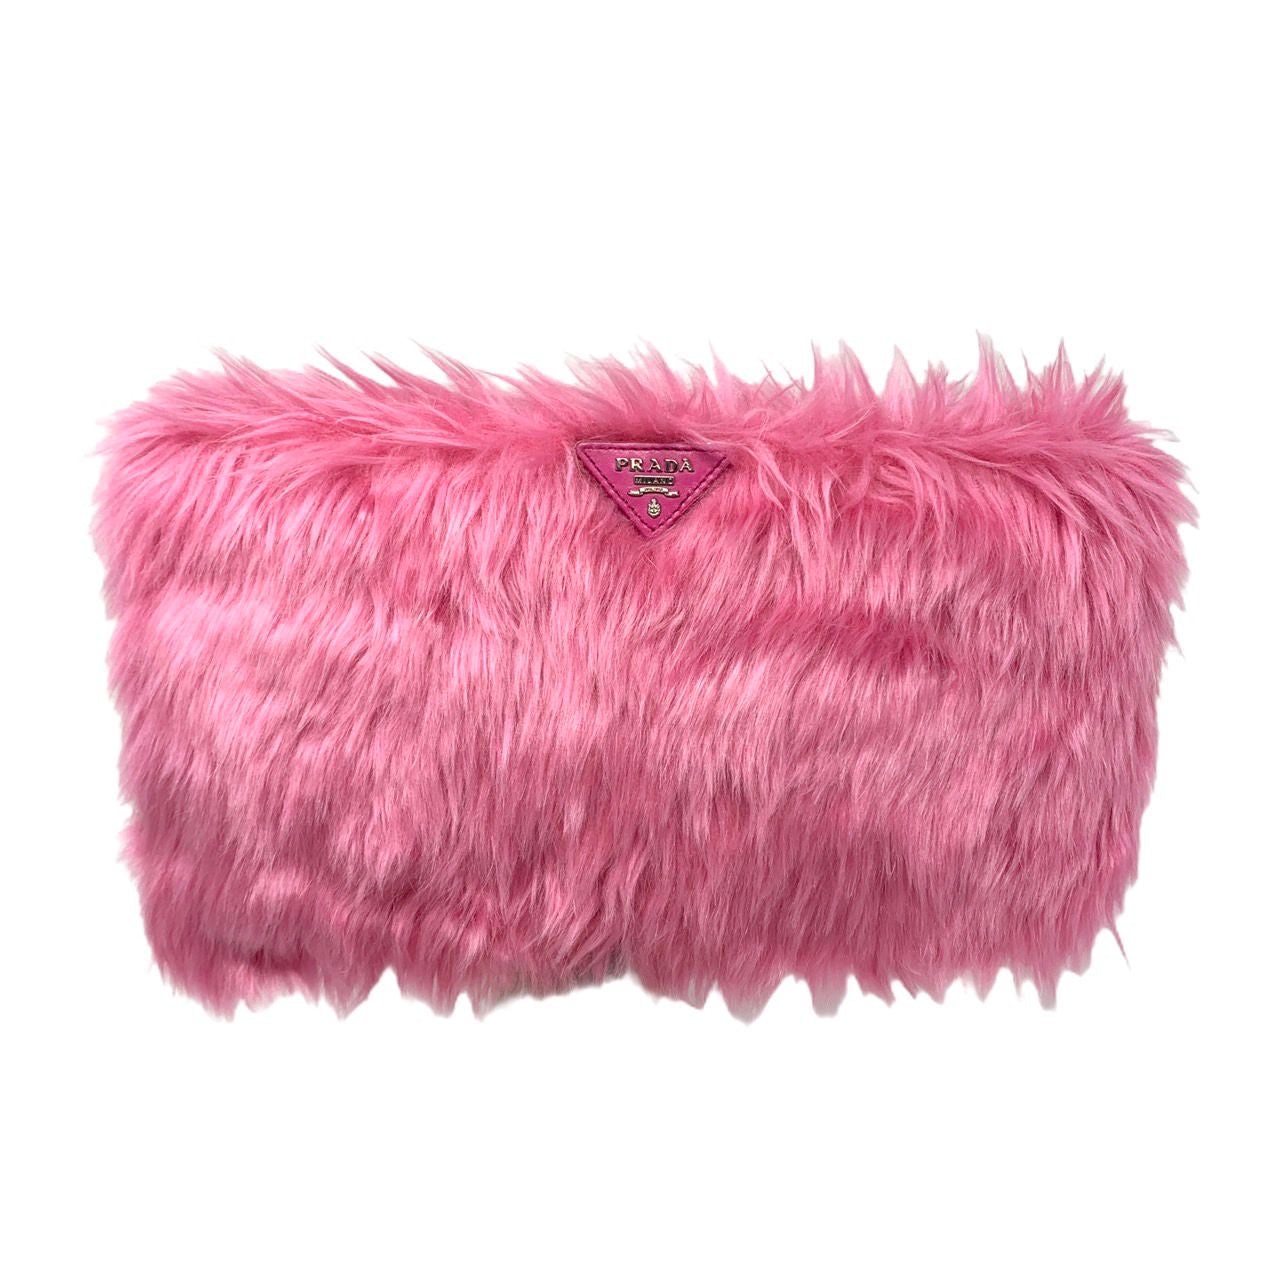 Prada Pink Fuzzy Large Clutch - Handbags